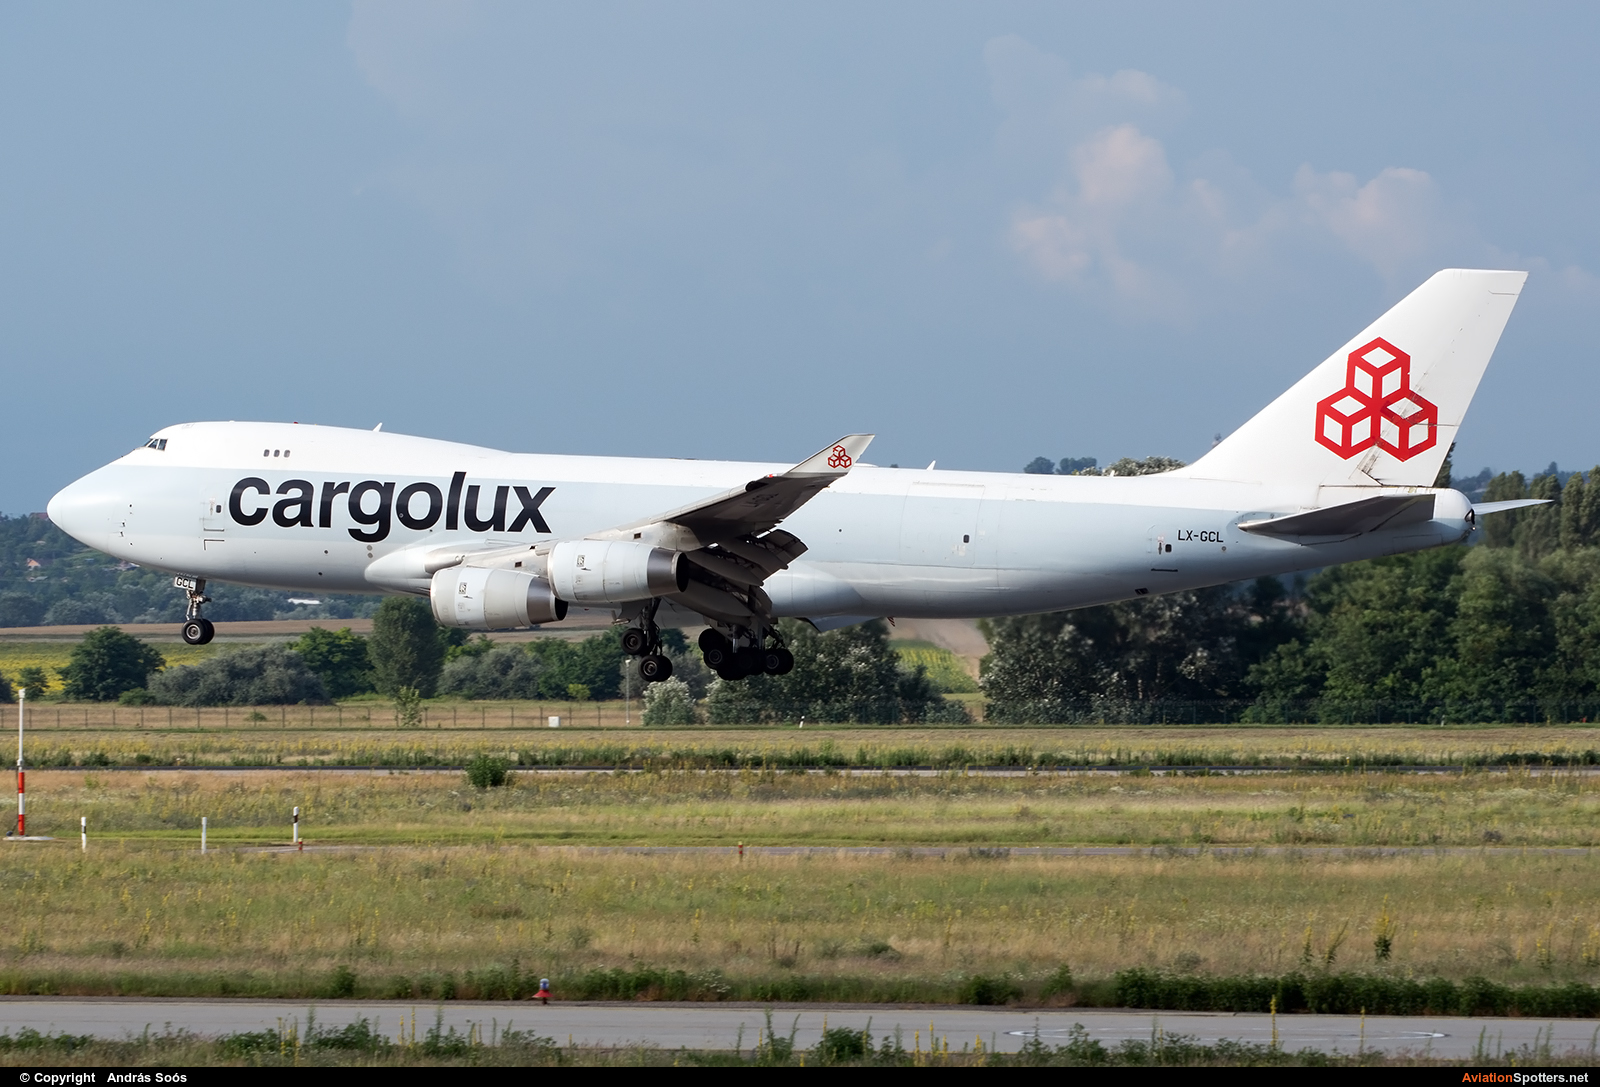 Cargolux  -  747-400F  (LX-GCL) By András Soós (sas1965)